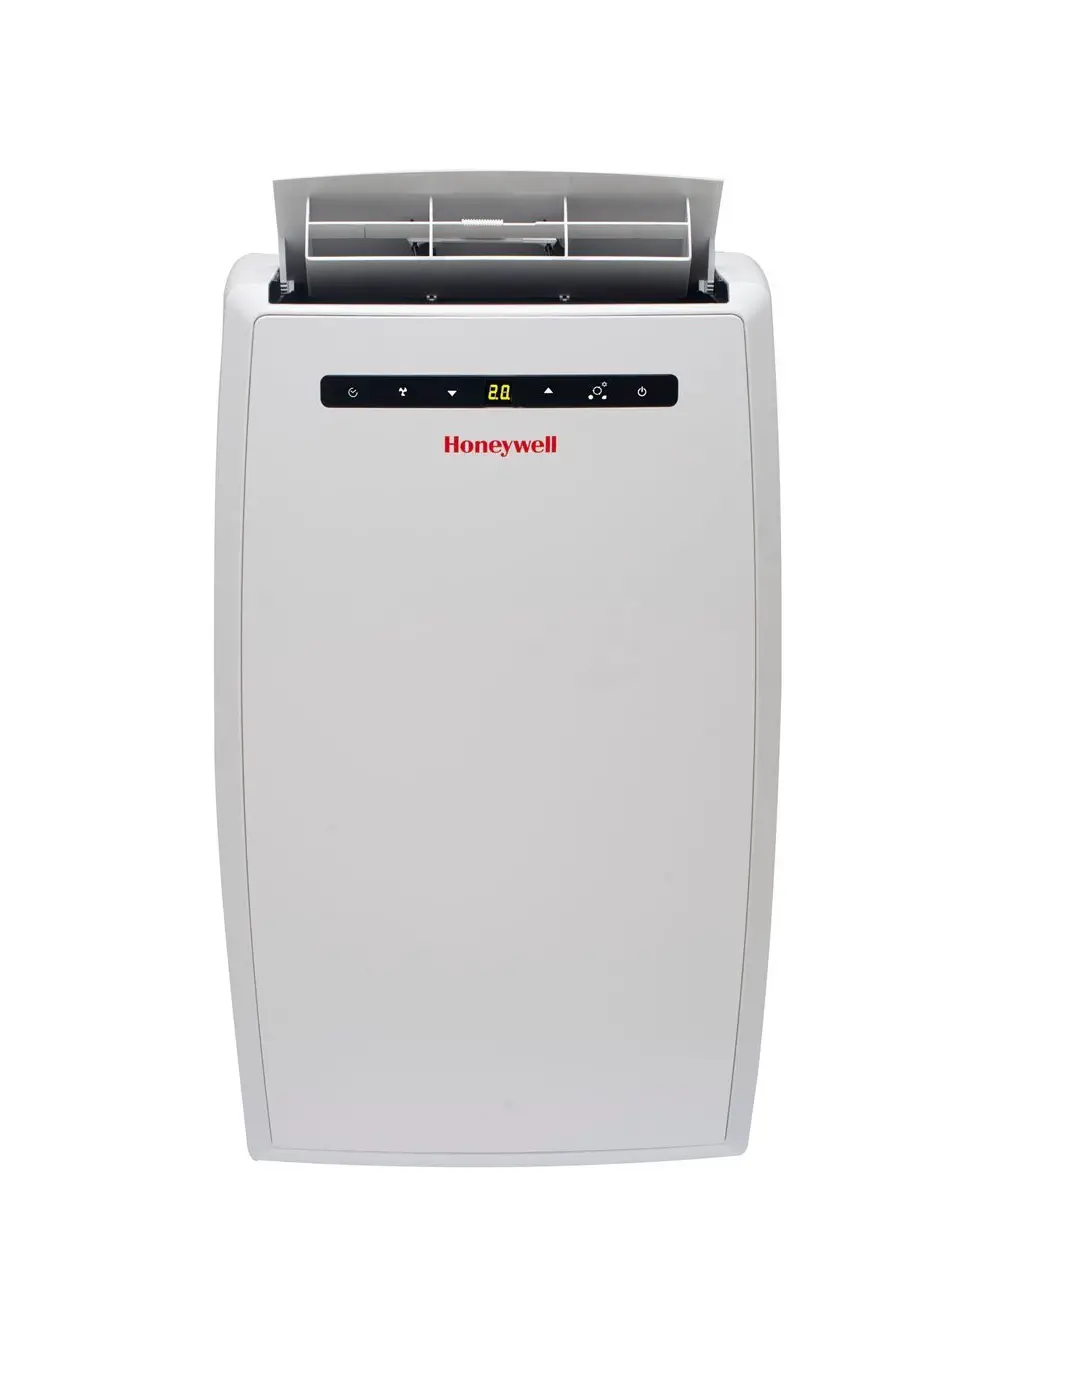 Honeywell Portable Air Conditioner User Manual [MN10CCS, MN10CHCS, MN12CCS, MN12CHCS, MN14CCS, MN14CHCS] - Manualsee